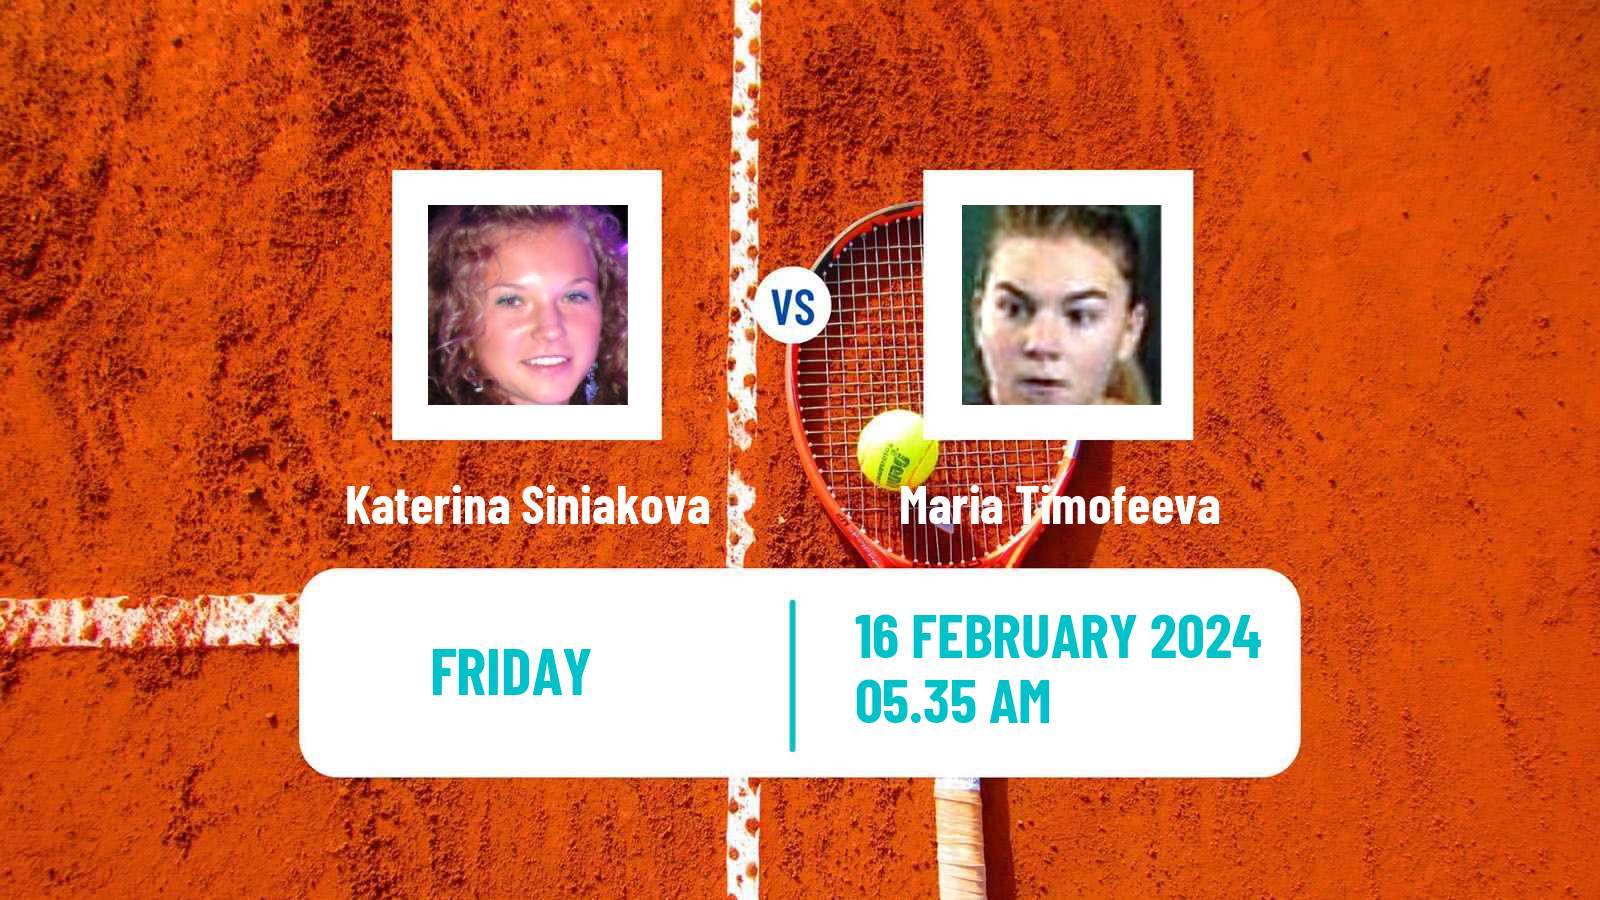 Tennis WTA Dubai Katerina Siniakova - Maria Timofeeva